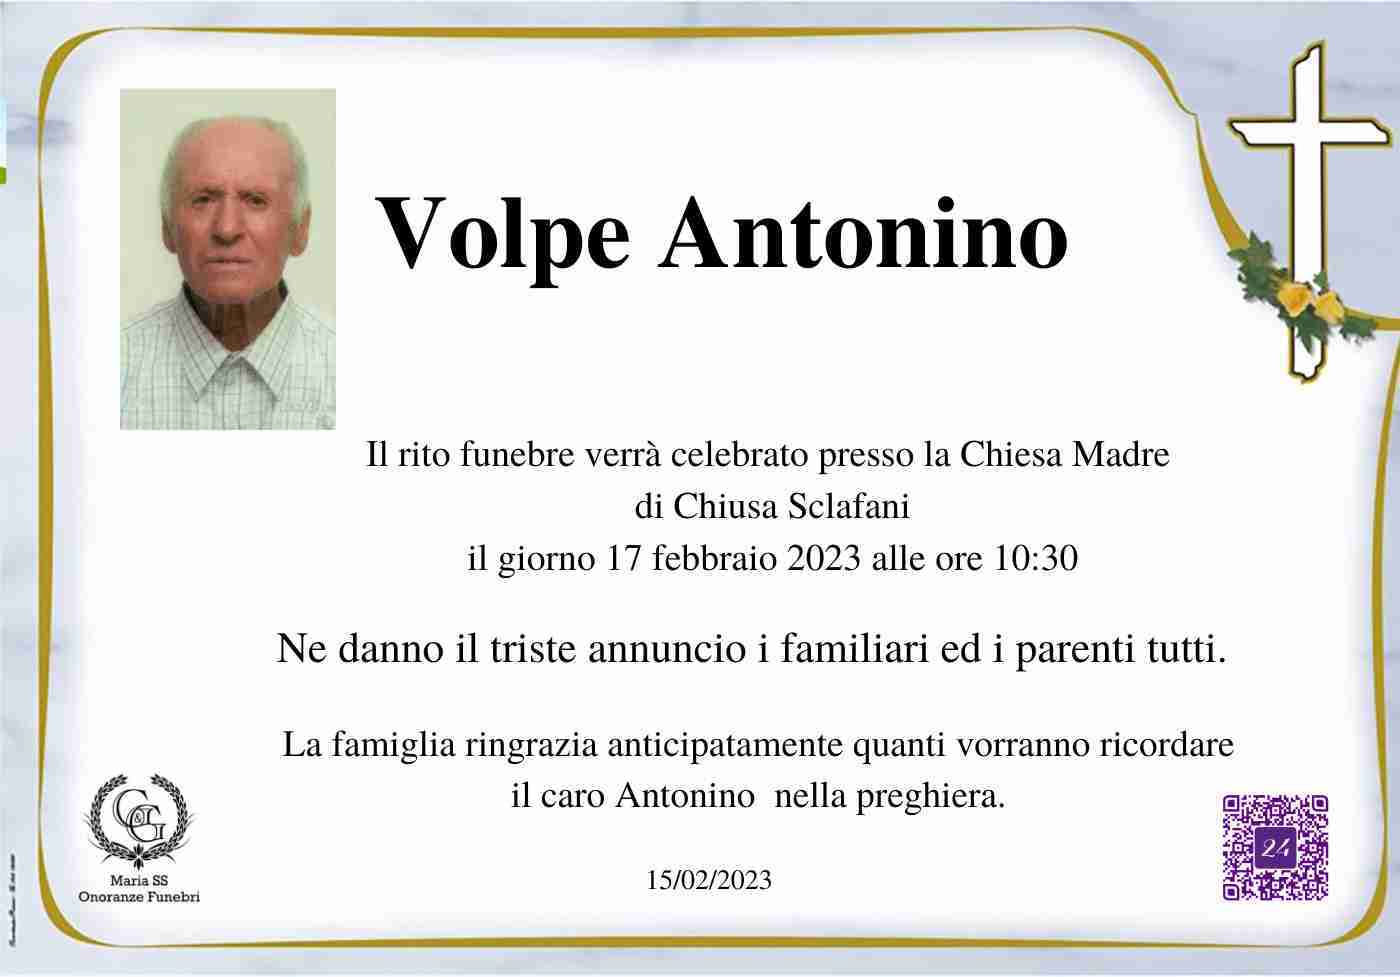 Antonino Volpe